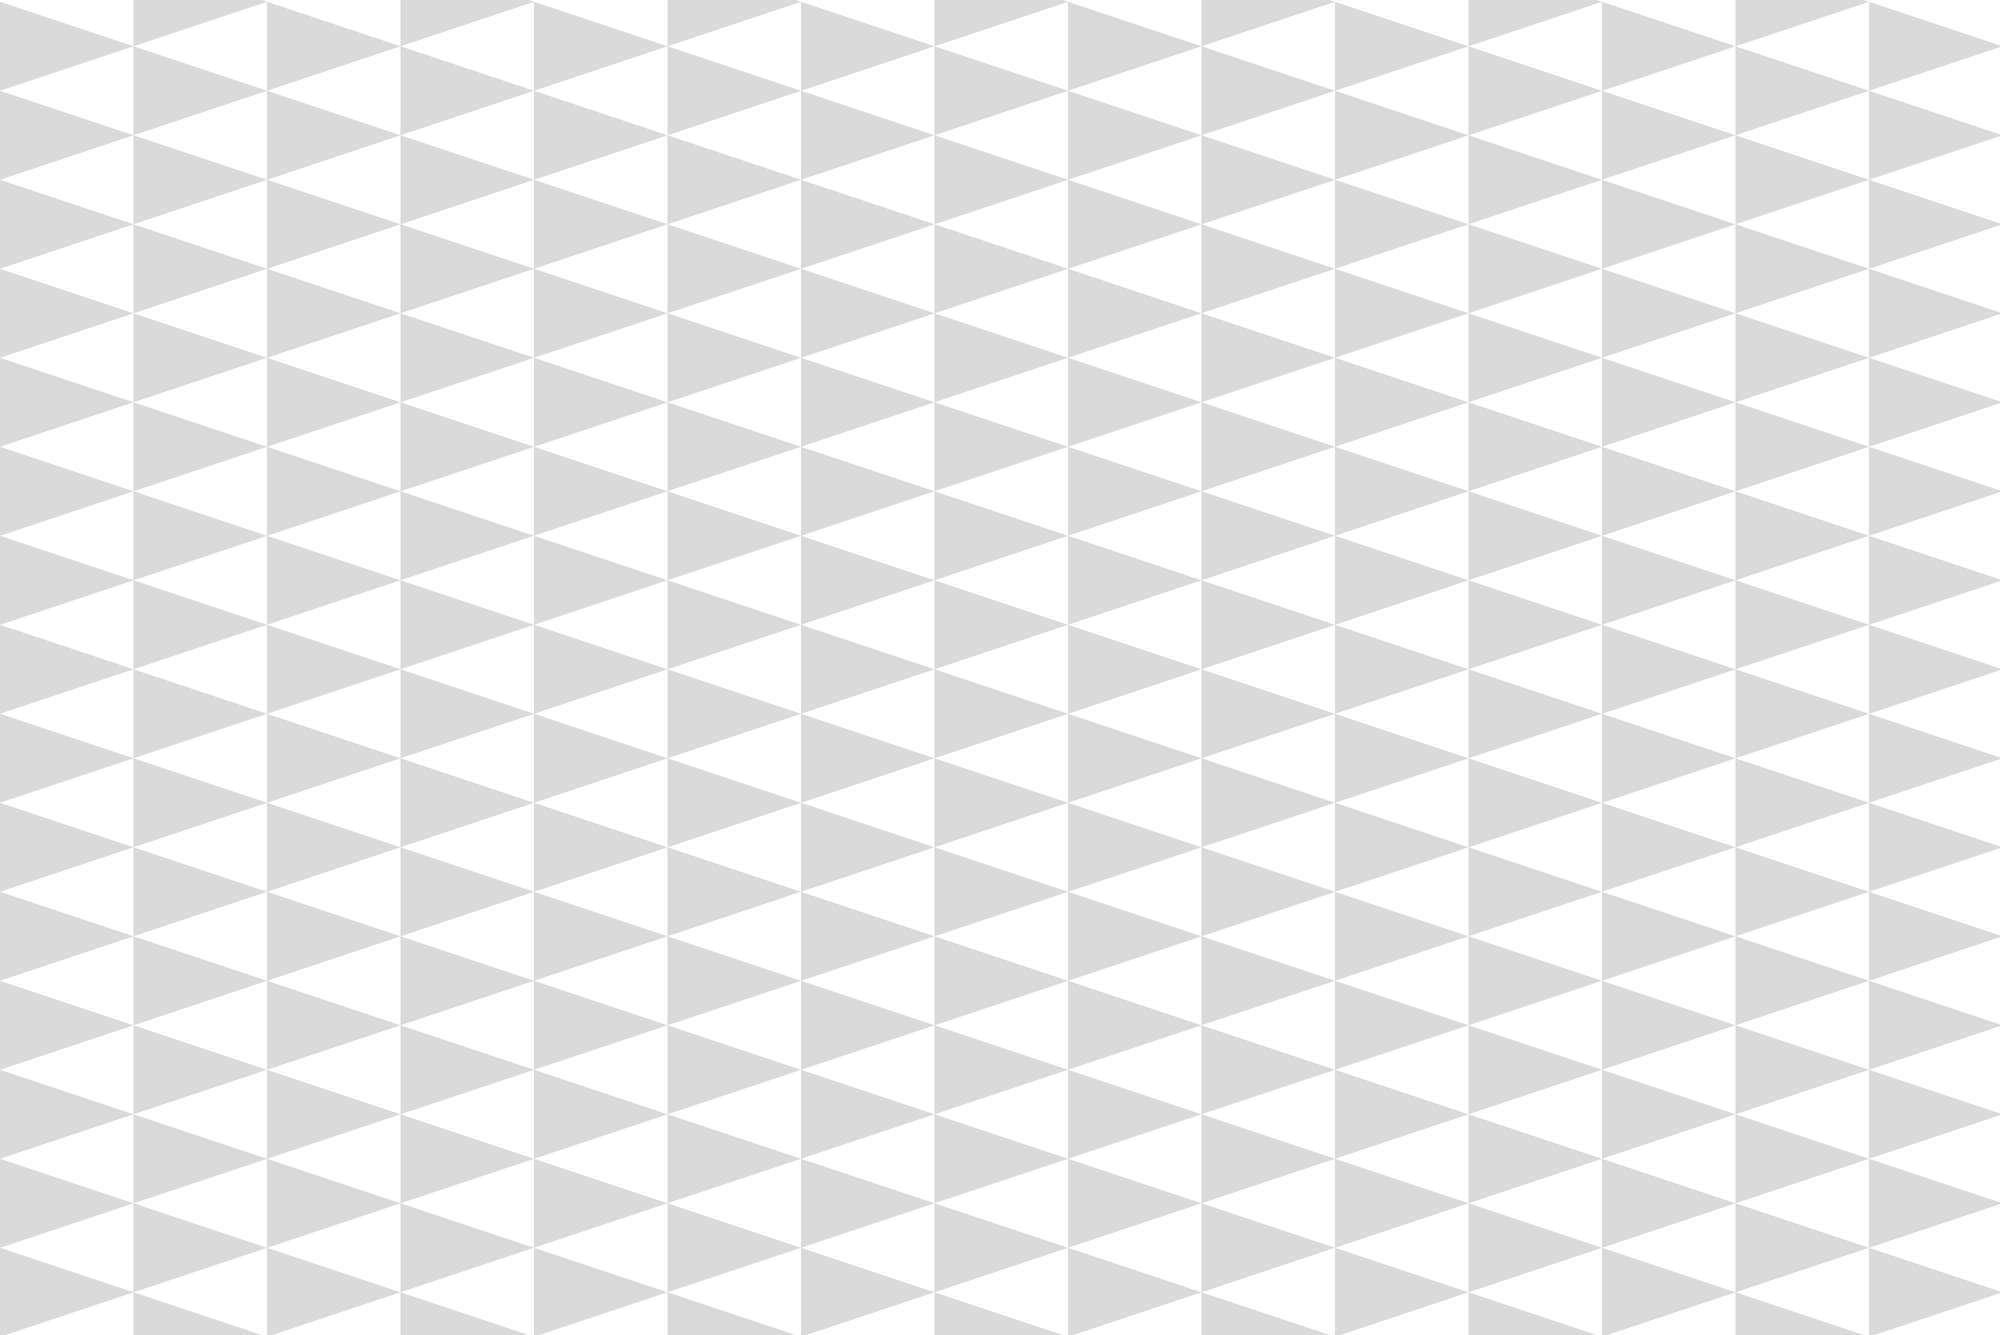             Papel pintado de diseño triángulos pequeños gris sobre vellón liso mate
        